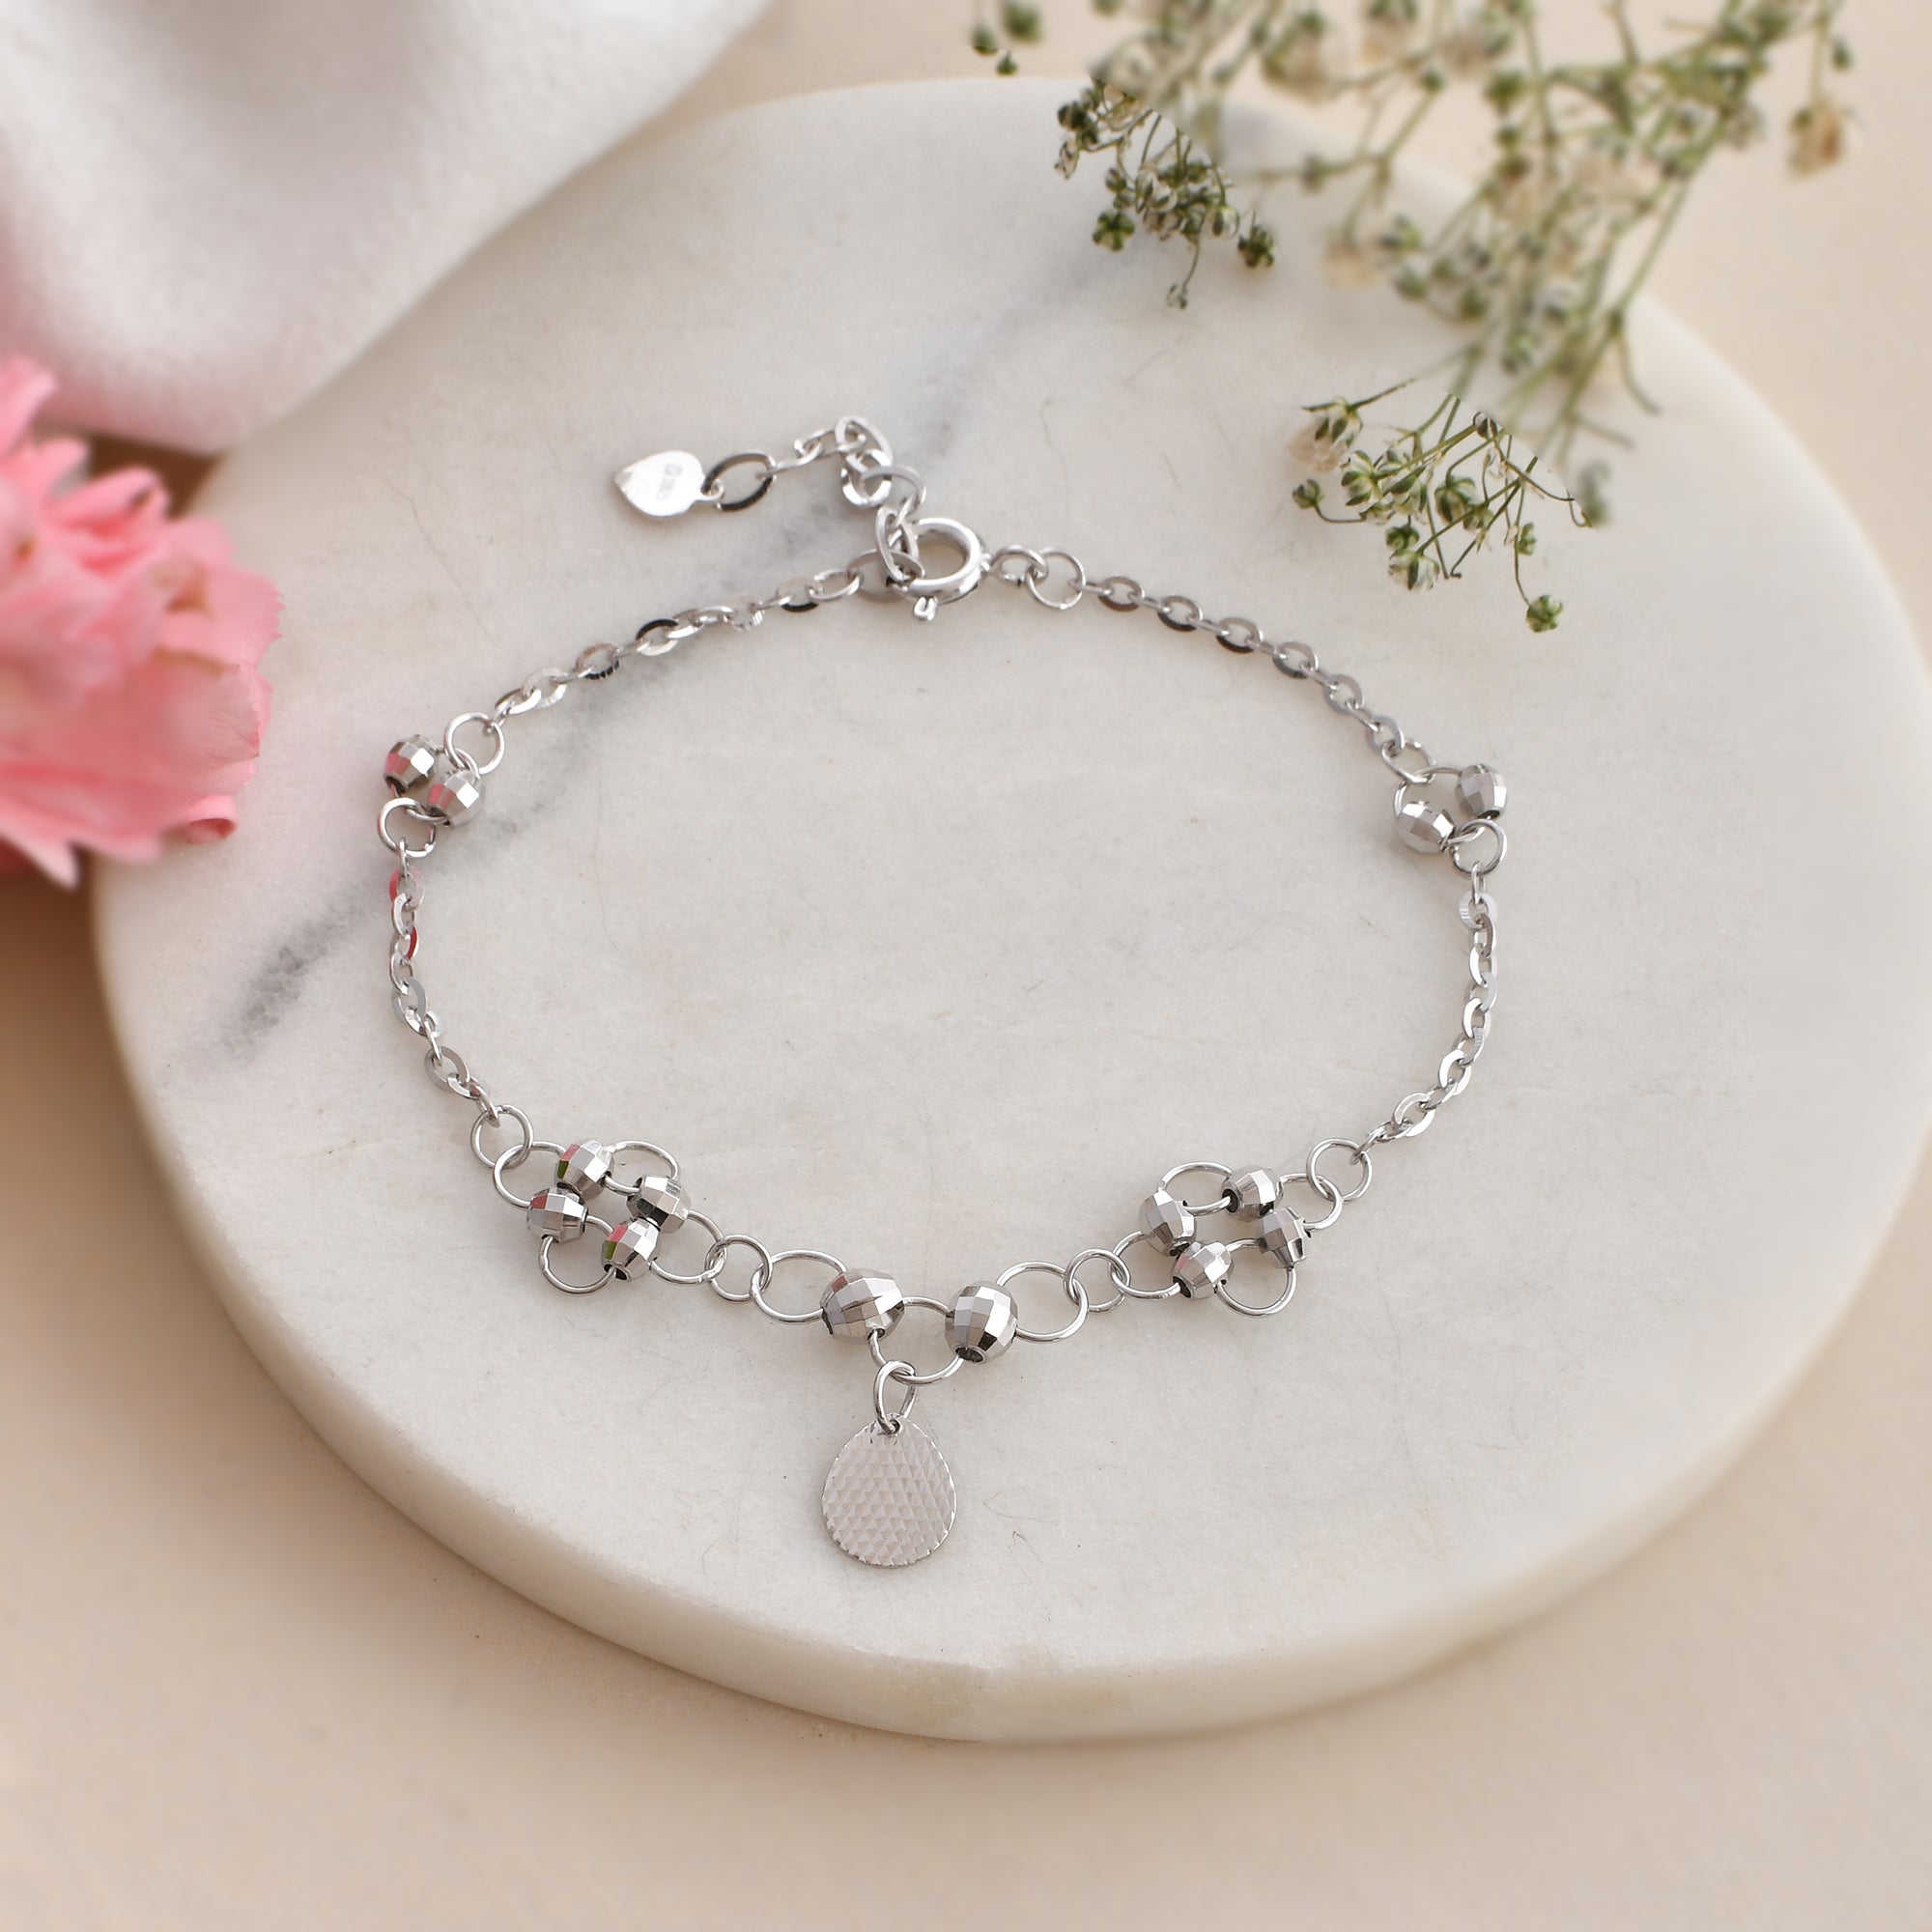 Fashion 925 Sterling Silver Hello Kitty Bracelet Hand Chain Girl's Jewelry  Gift | eBay